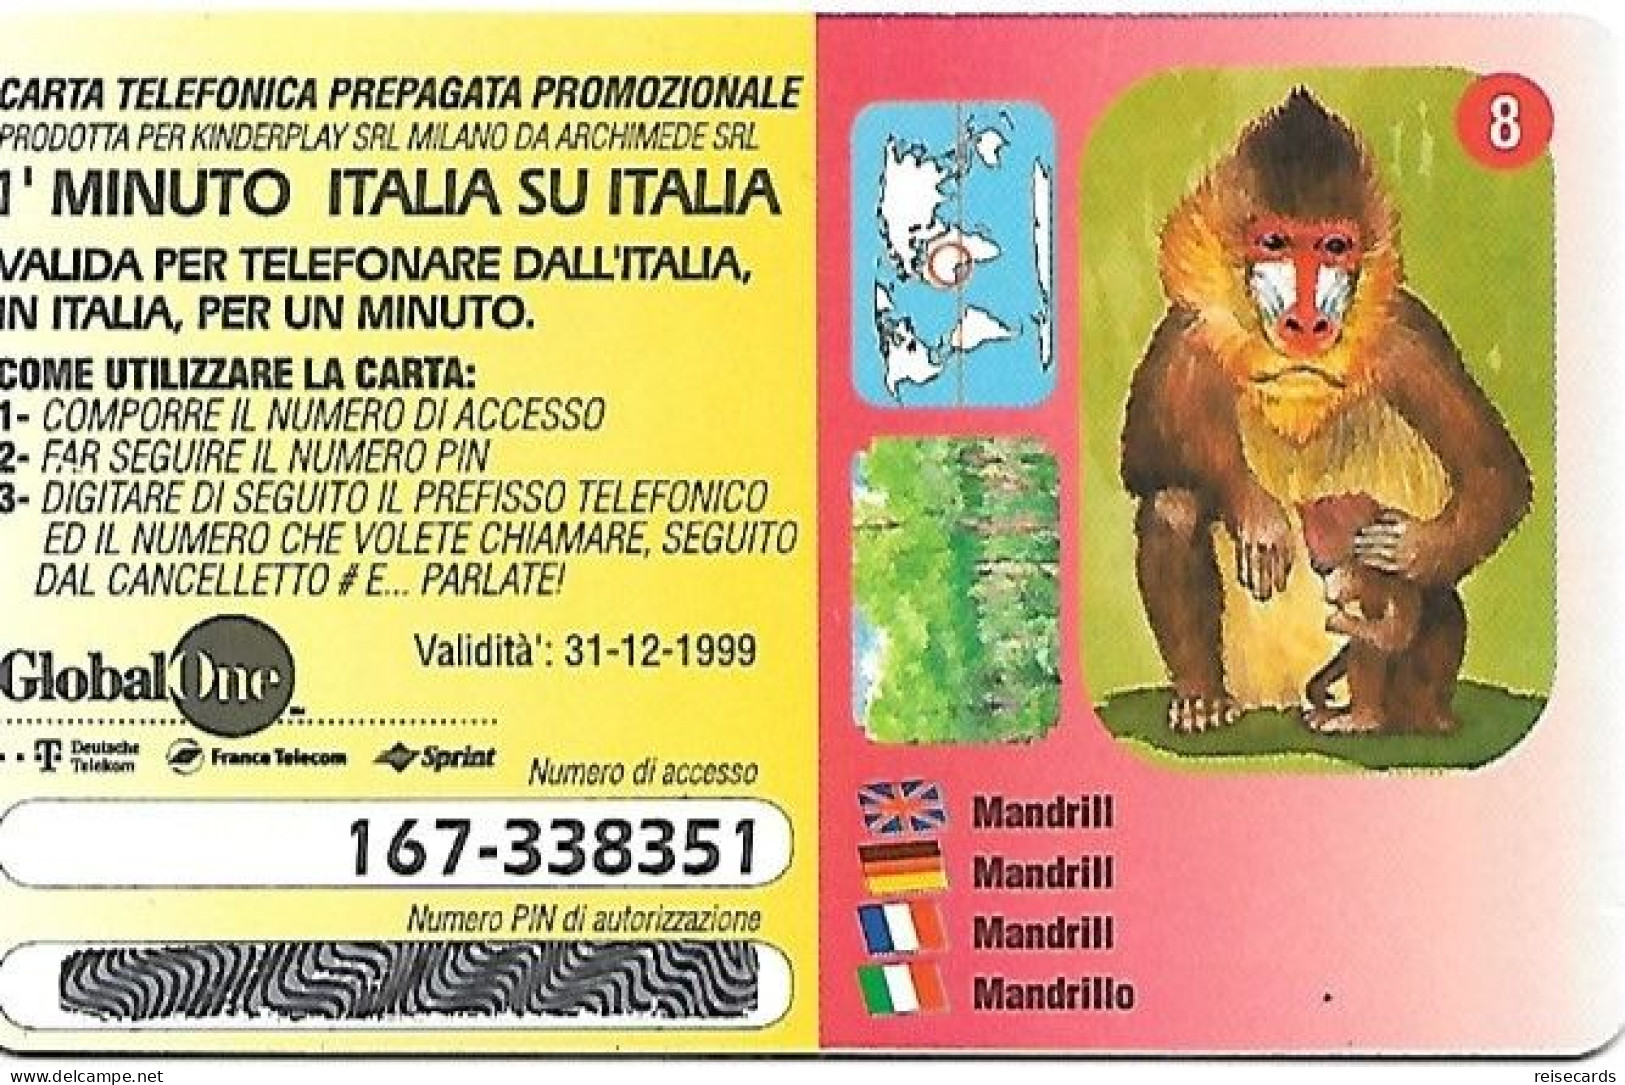 Italy: Prepaid GlobalOne - Save The Planet 8, Mandrill - [2] Sim Cards, Prepaid & Refills